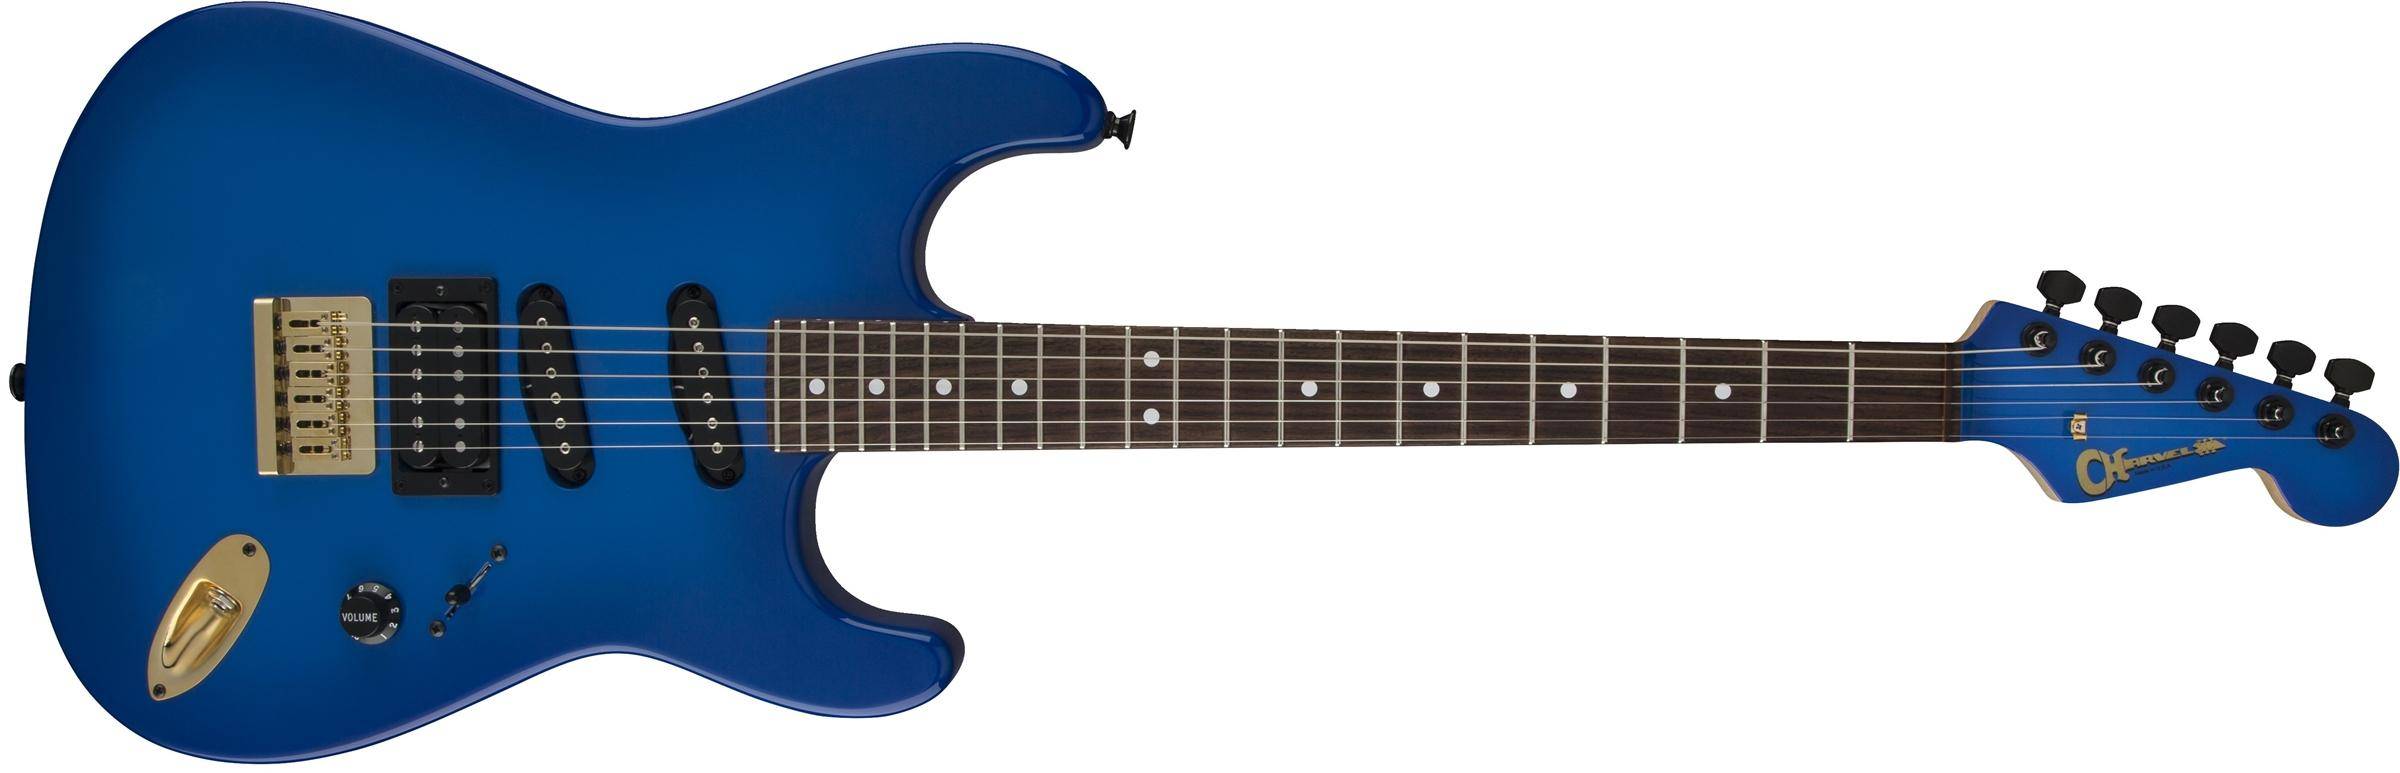 Charvel Guitars Jake E Lee Signature Model, Rosewood Fingerboard, Blue  Burst | Long & McQuade